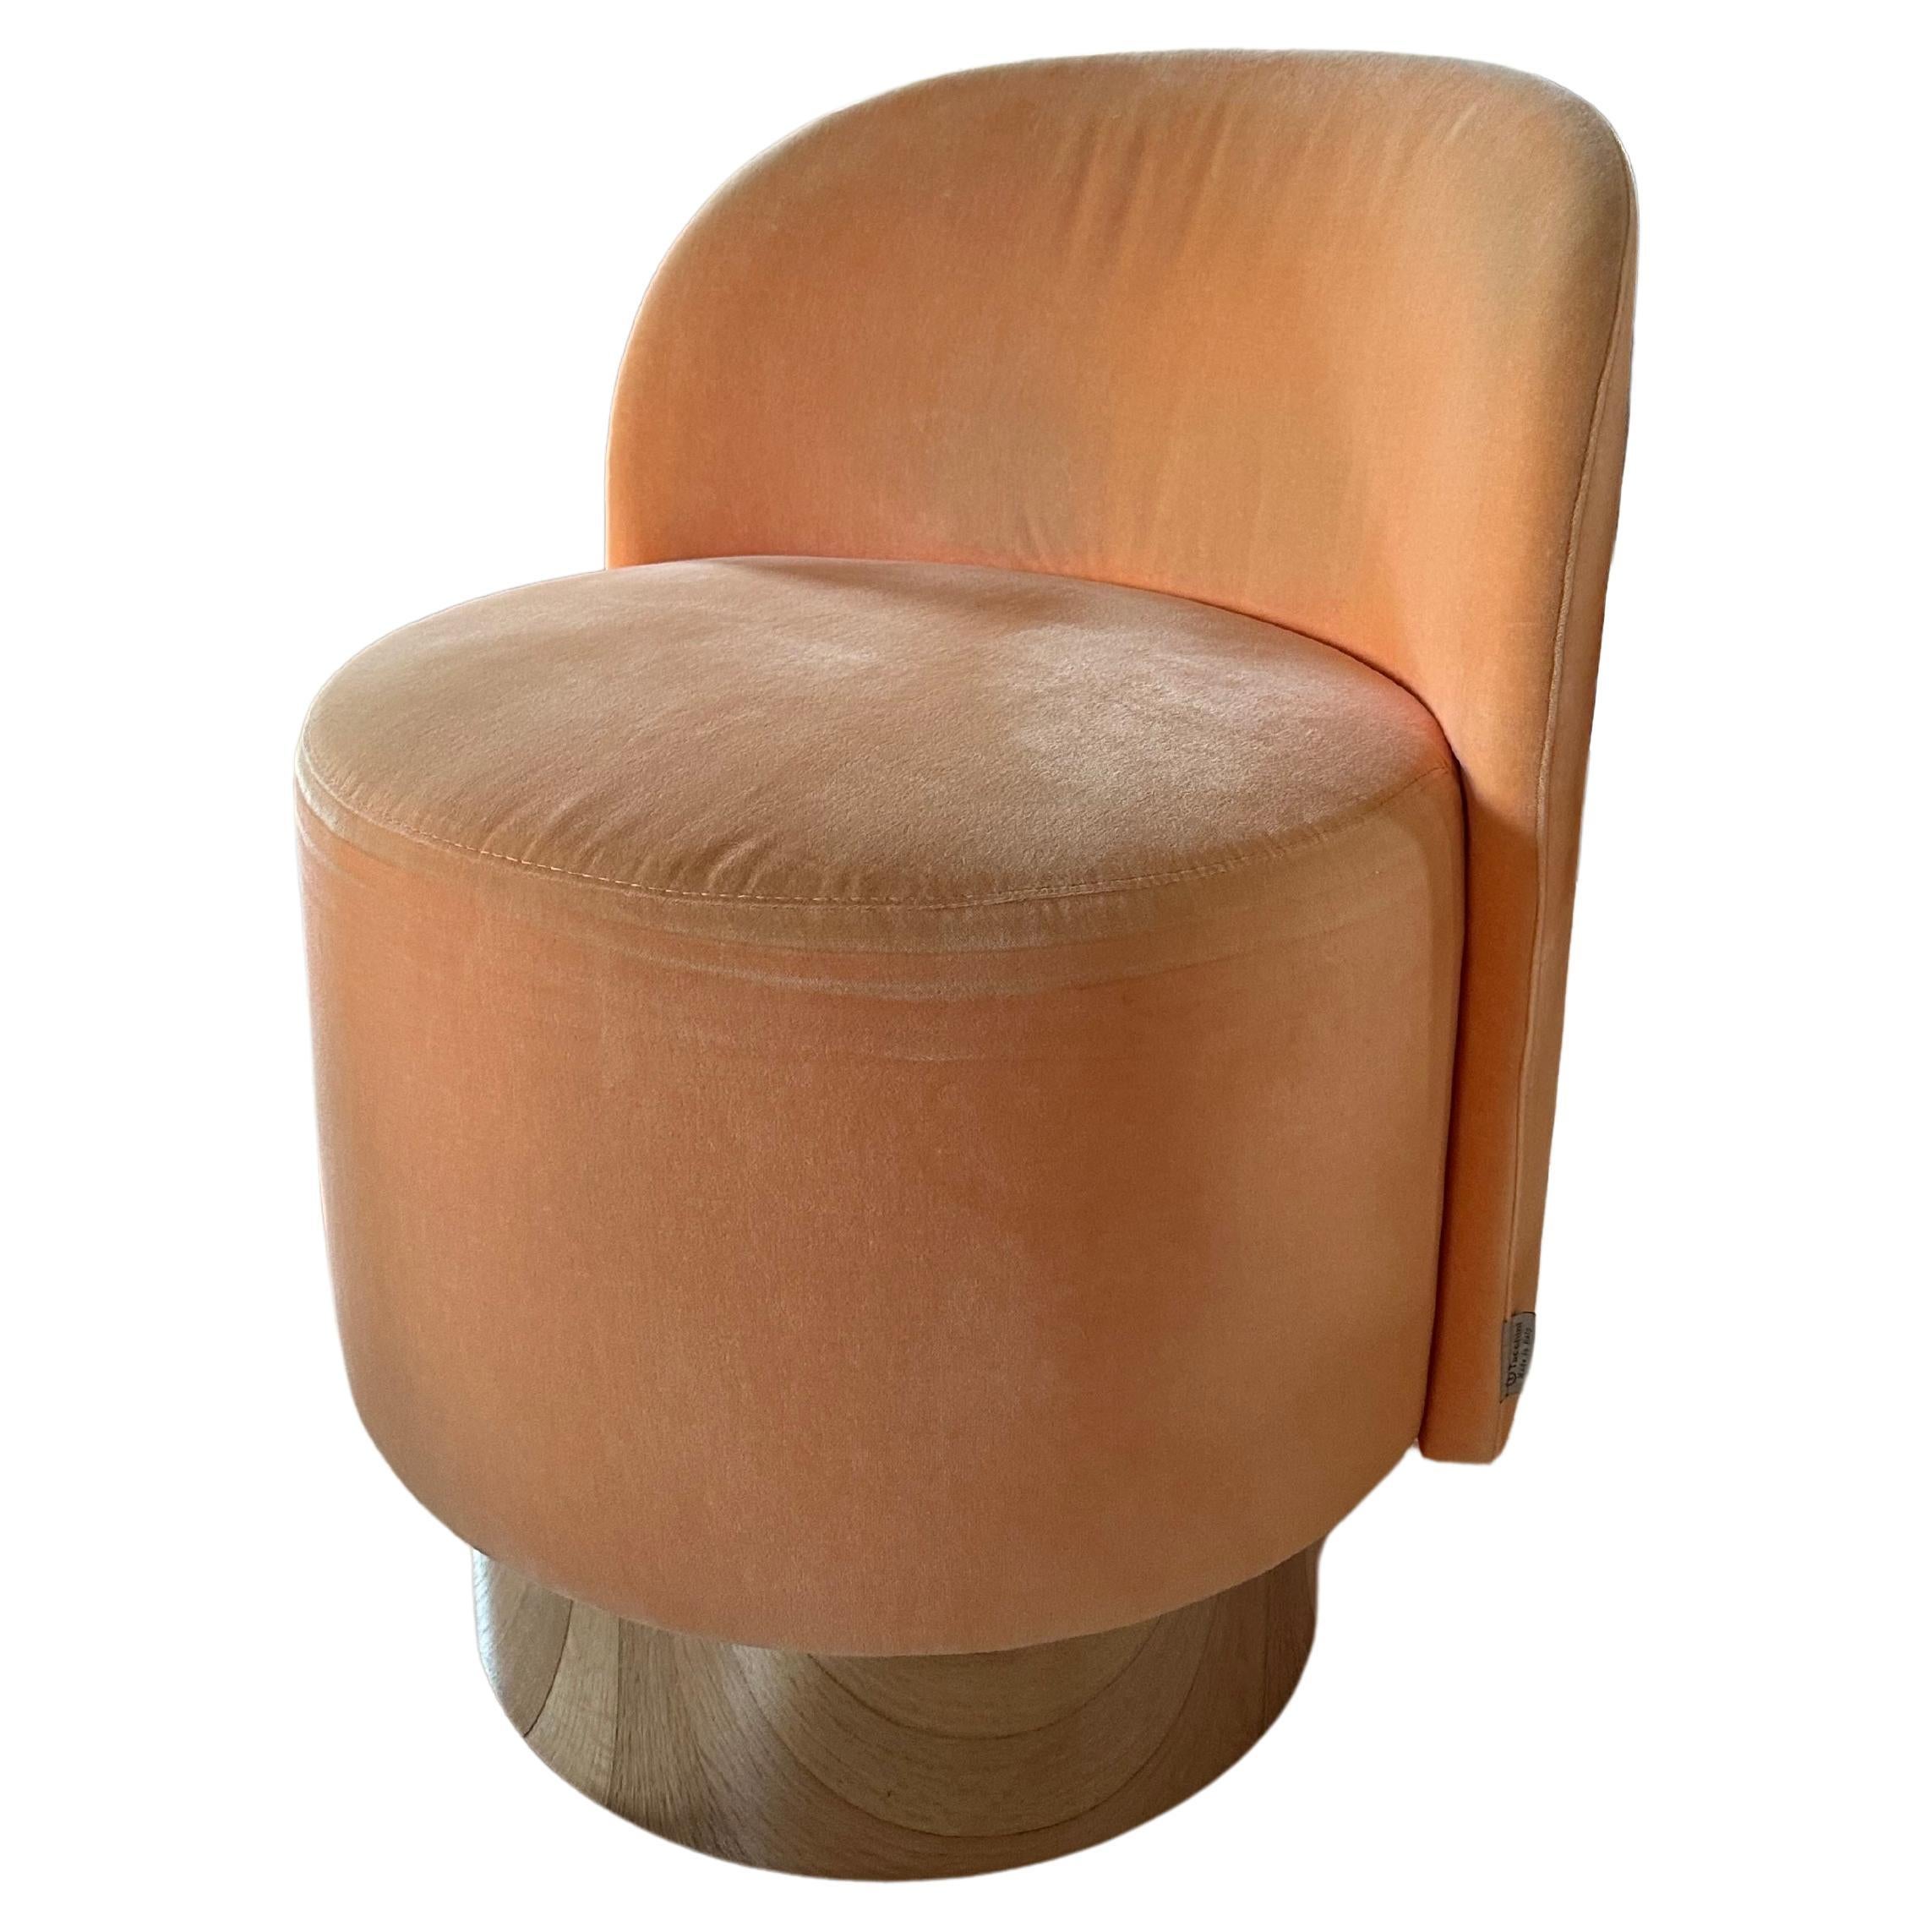 Tacchini Velvet Pastille Chair by Studiopepe in STOCK